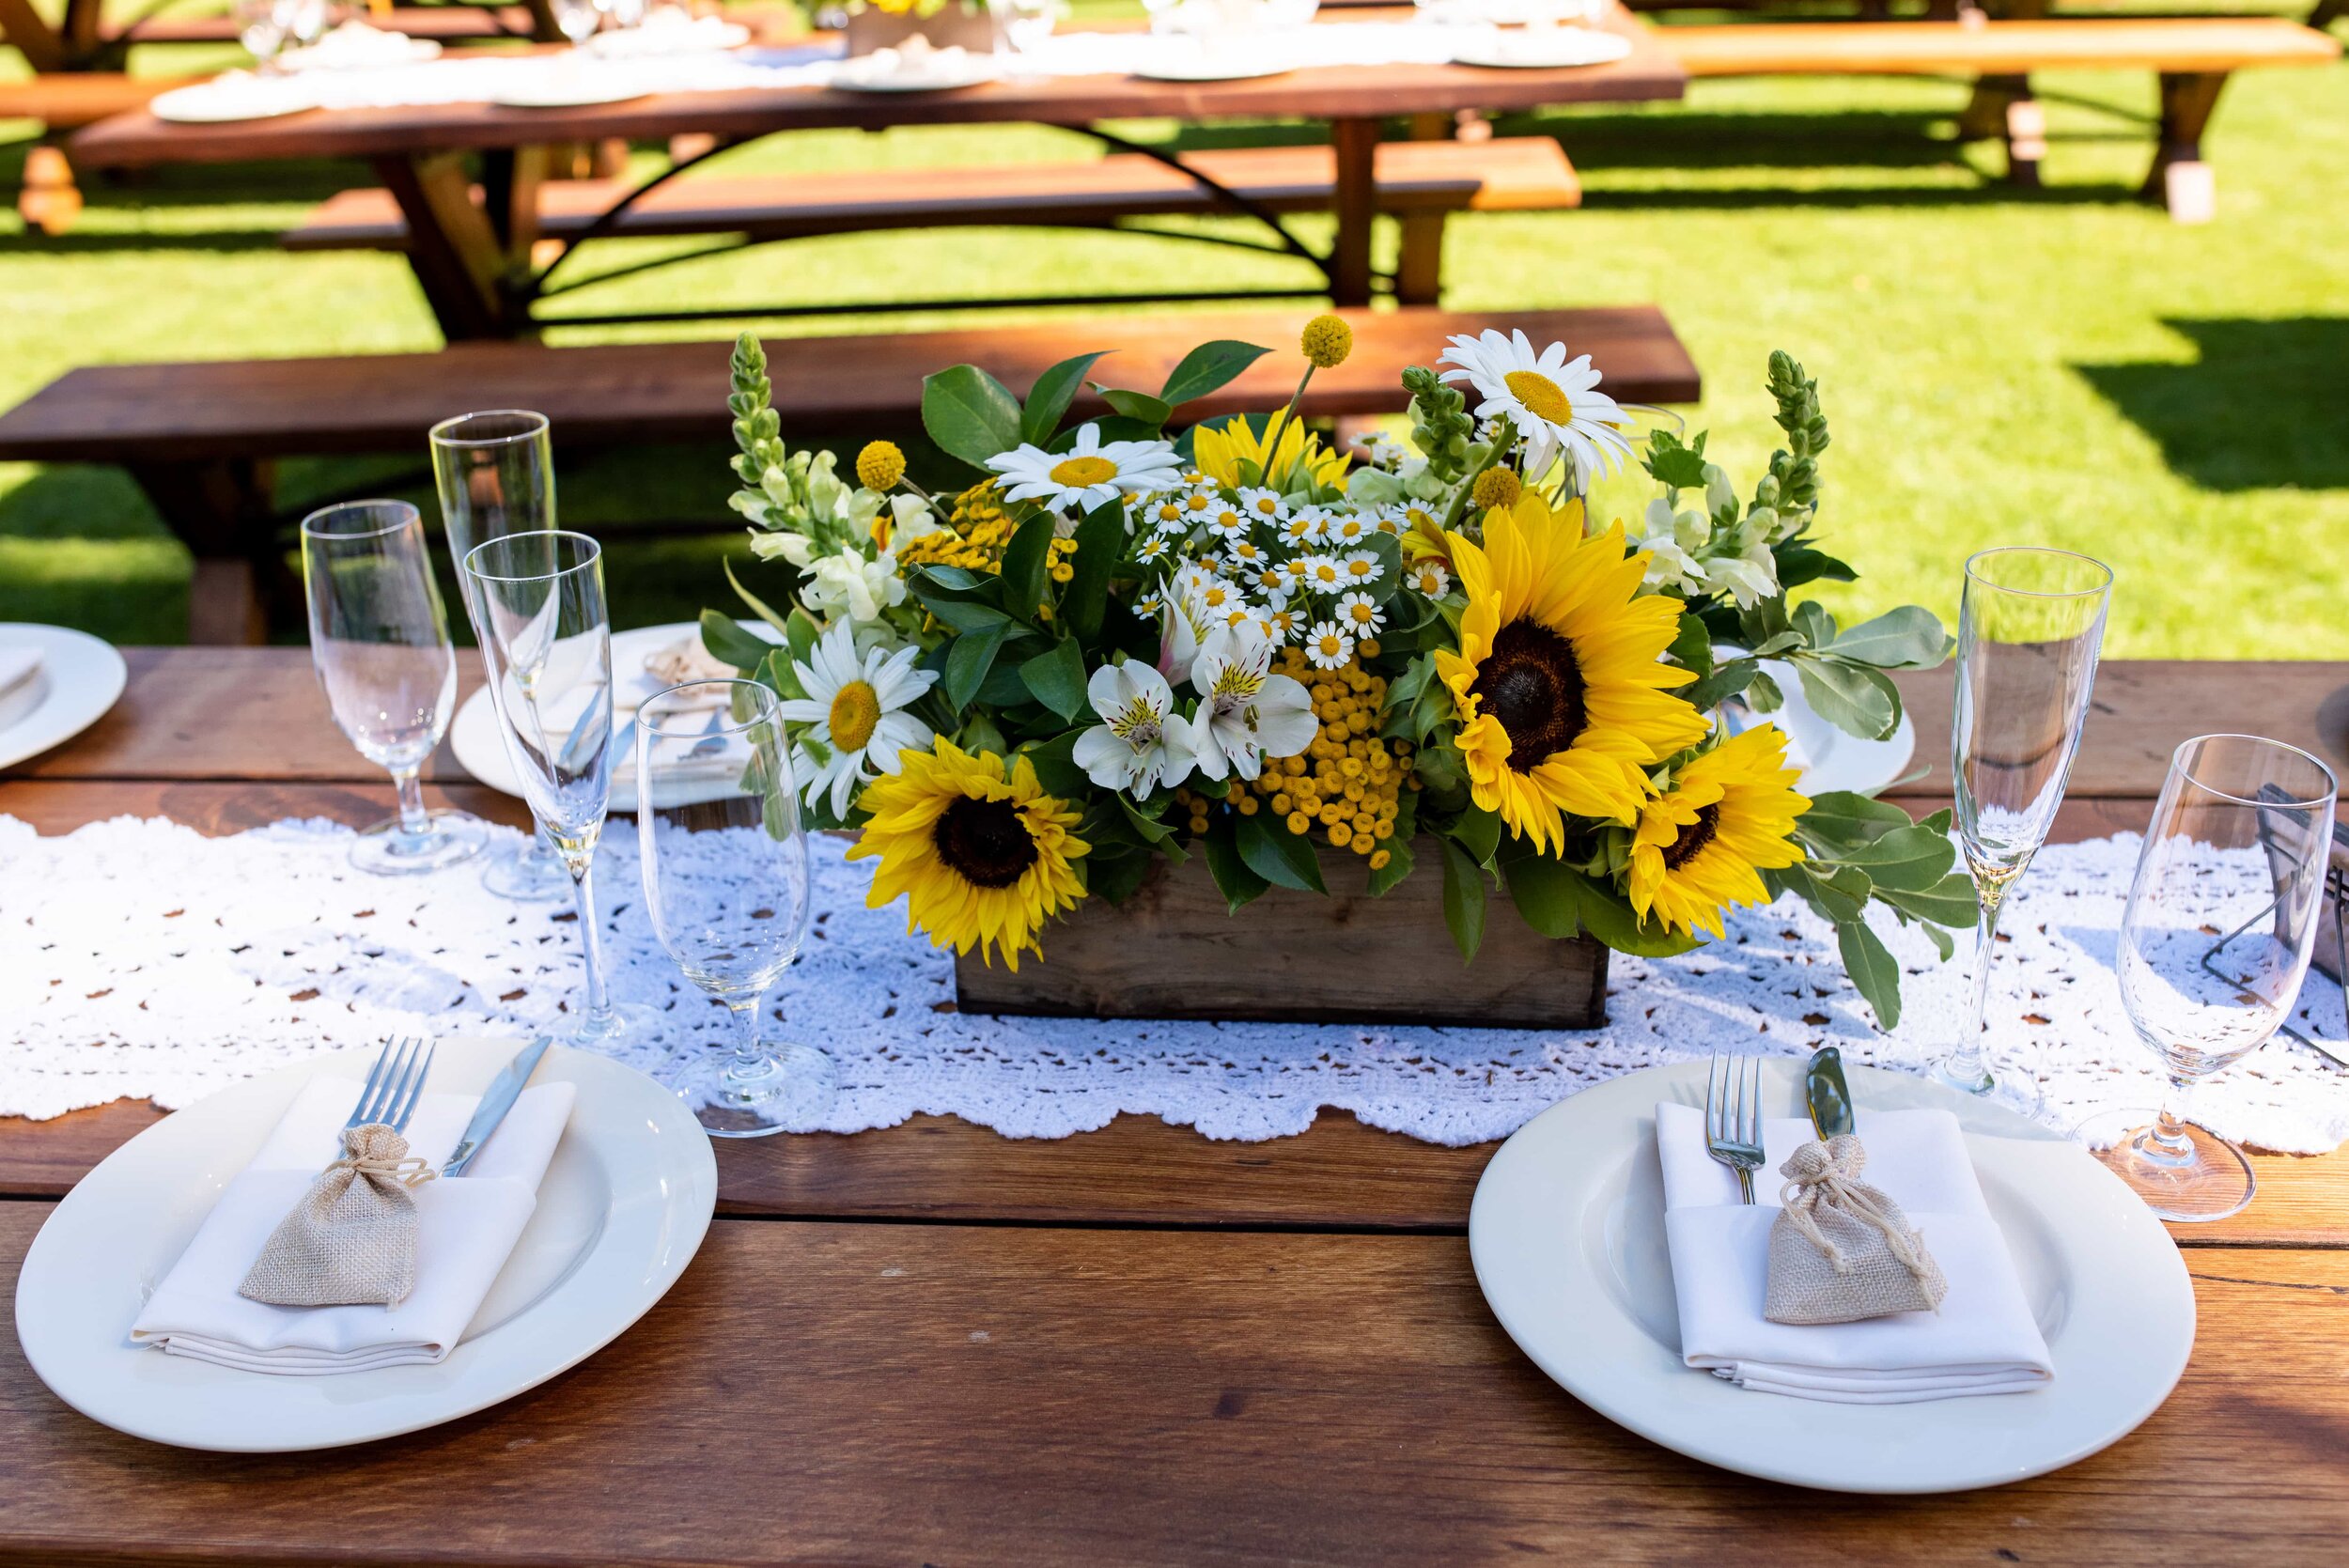 Sunflower center piece of wedding table